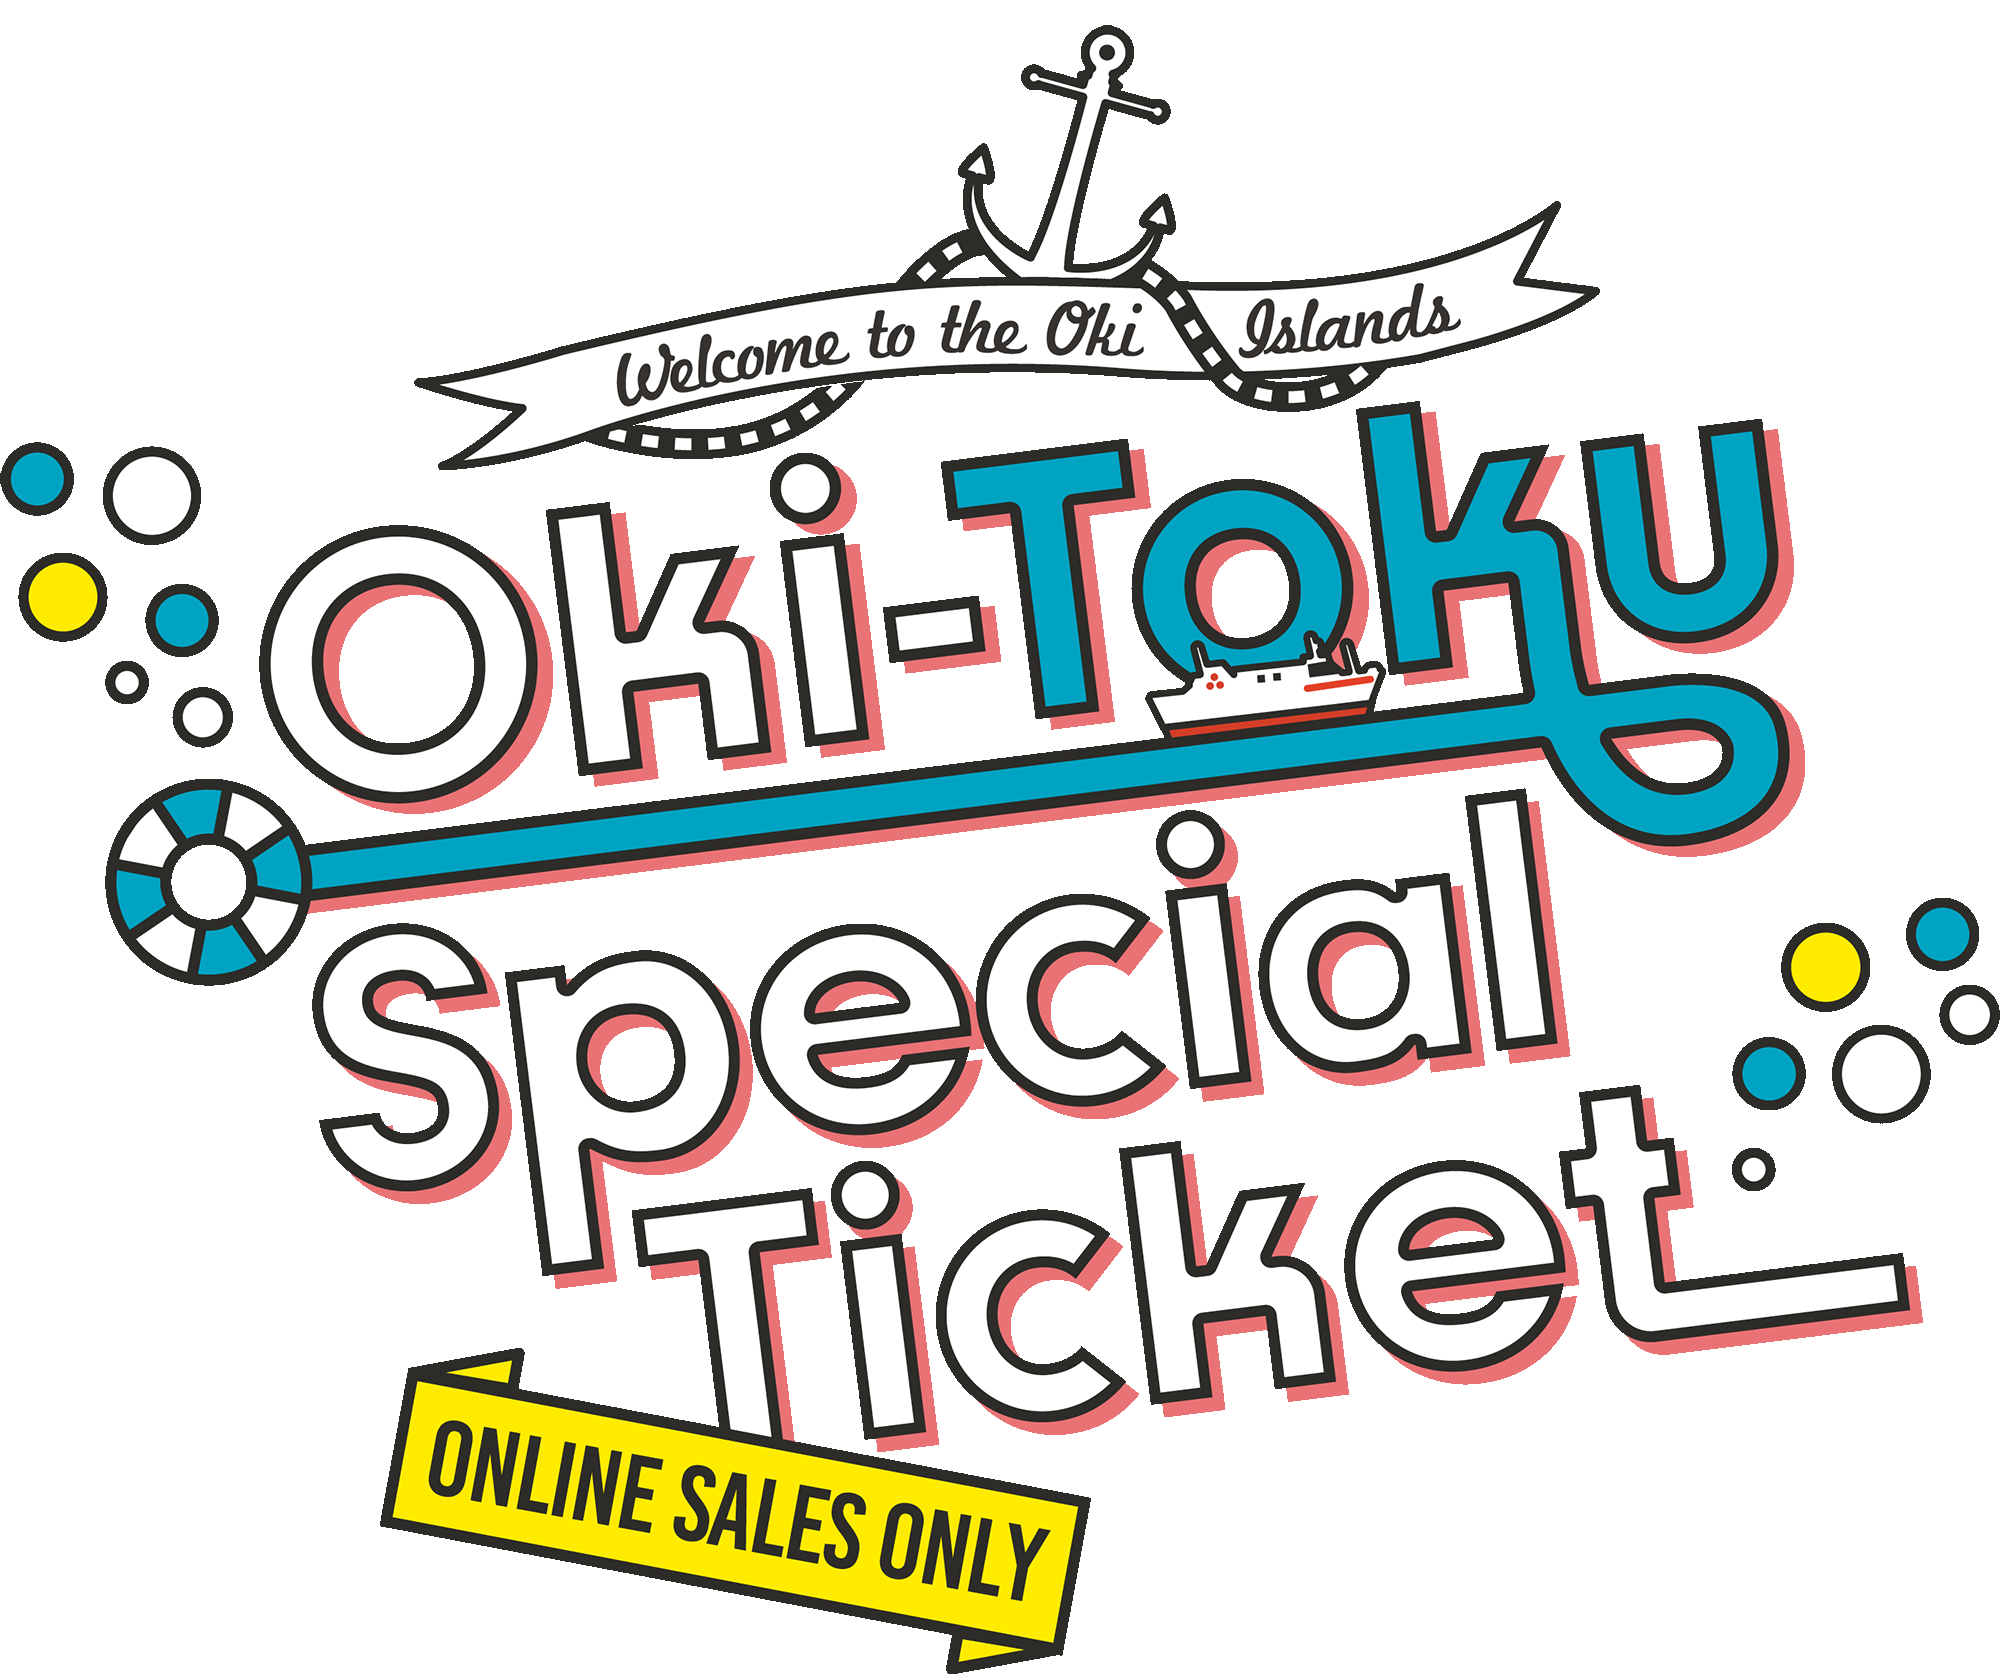 Oki-toku Special Ticket Online Sales Only